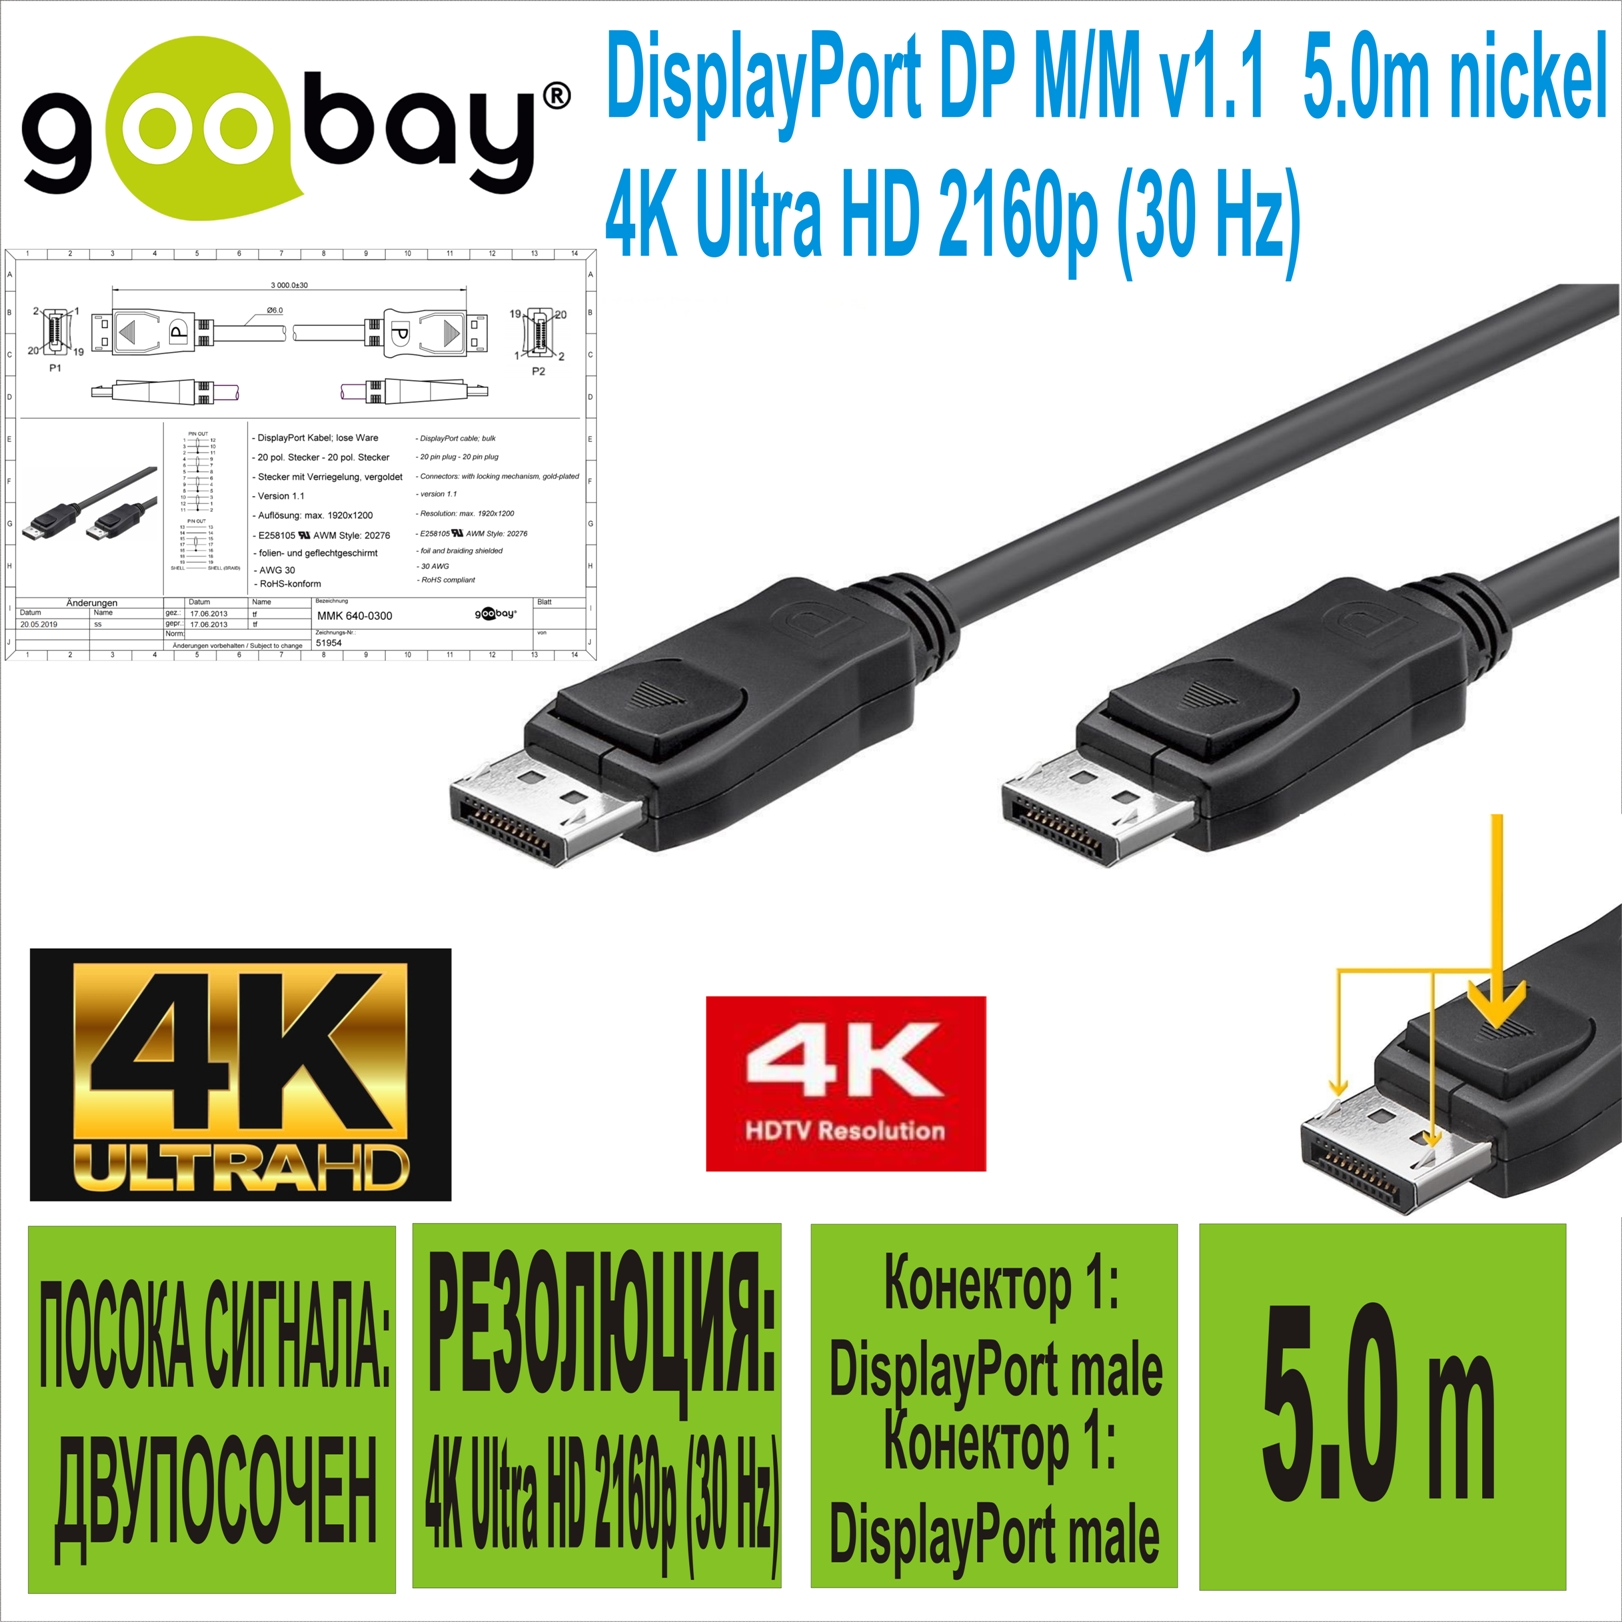 DisplayPort DP M/M v1.1  5.0m nickel GOOBAY